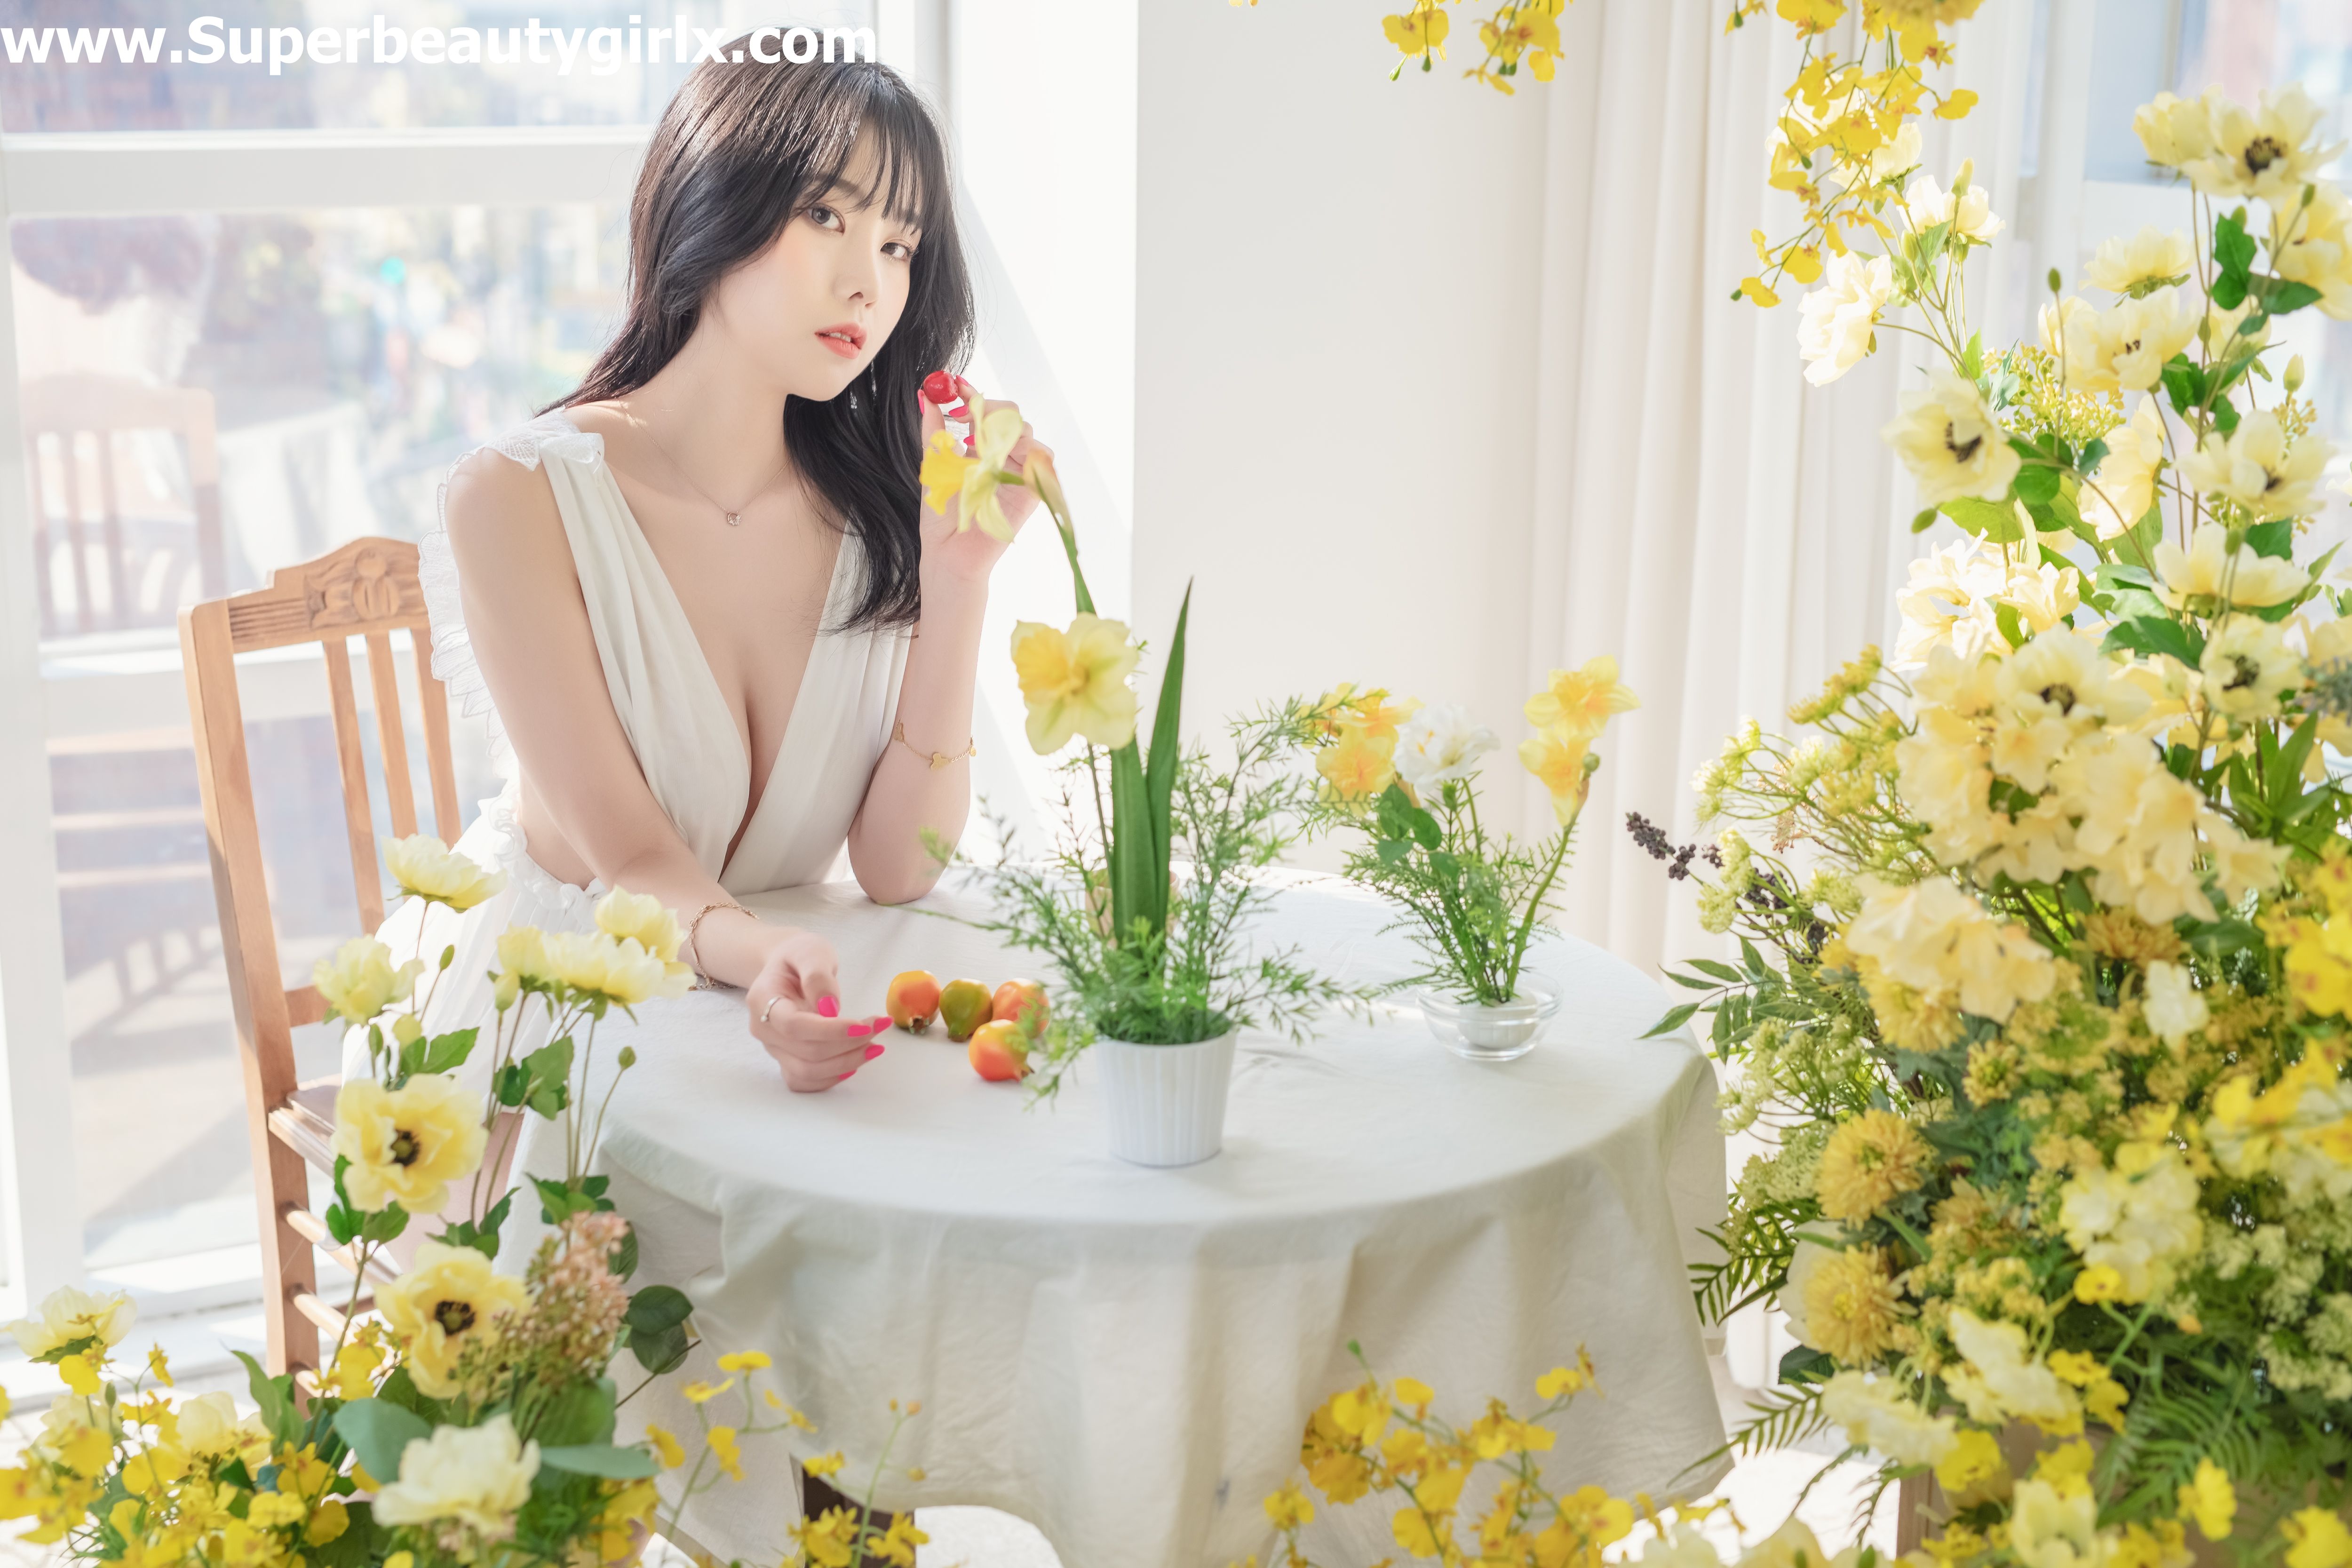 Patreon-Yuna-Flowers-Superbeautygirlx.com